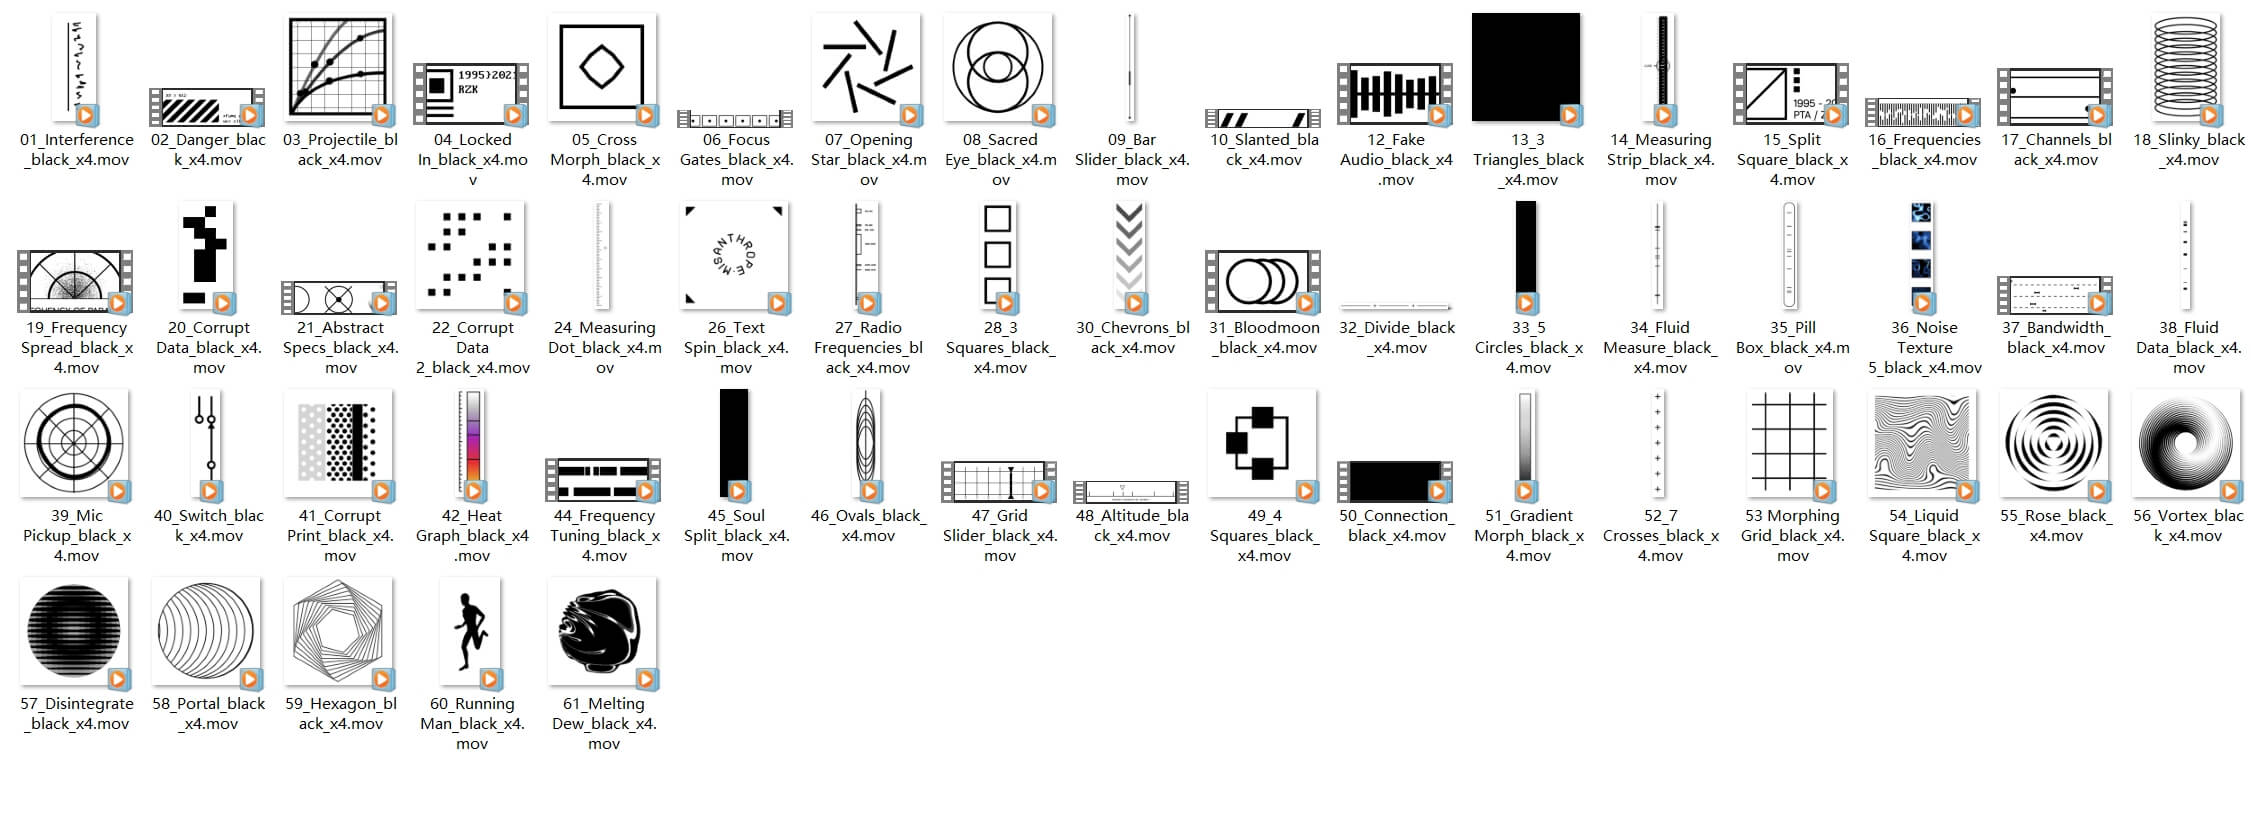 Motion Icon Pack 60多个极简主义抽象趣味性预渲染动画运动图标形状元素包MOV动效素材 Animated Elements vol.1 图标素材 第4张